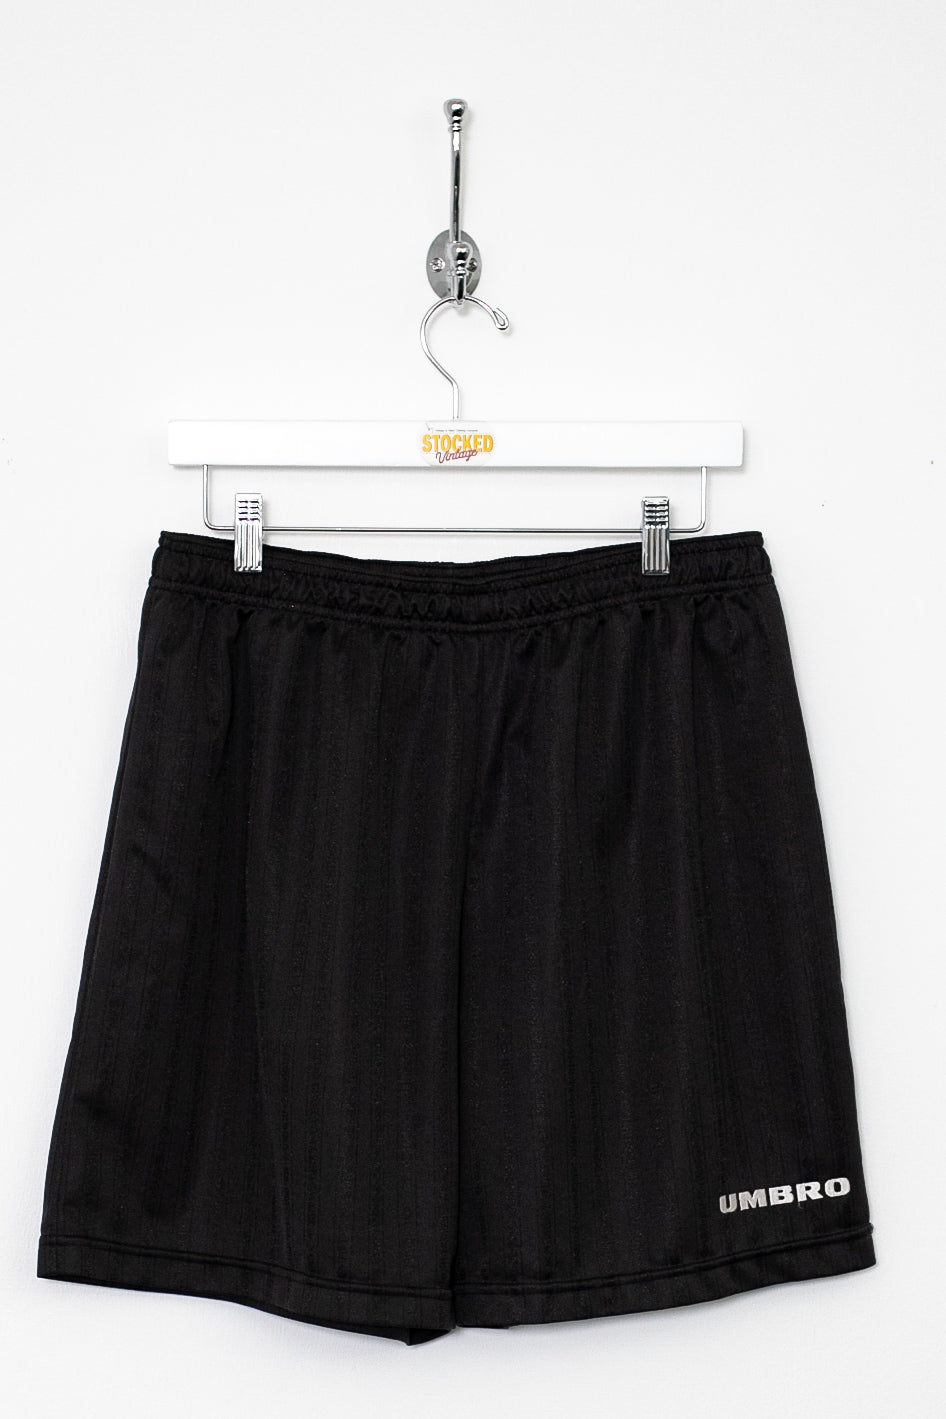 90s Umbro Shorts (XL)